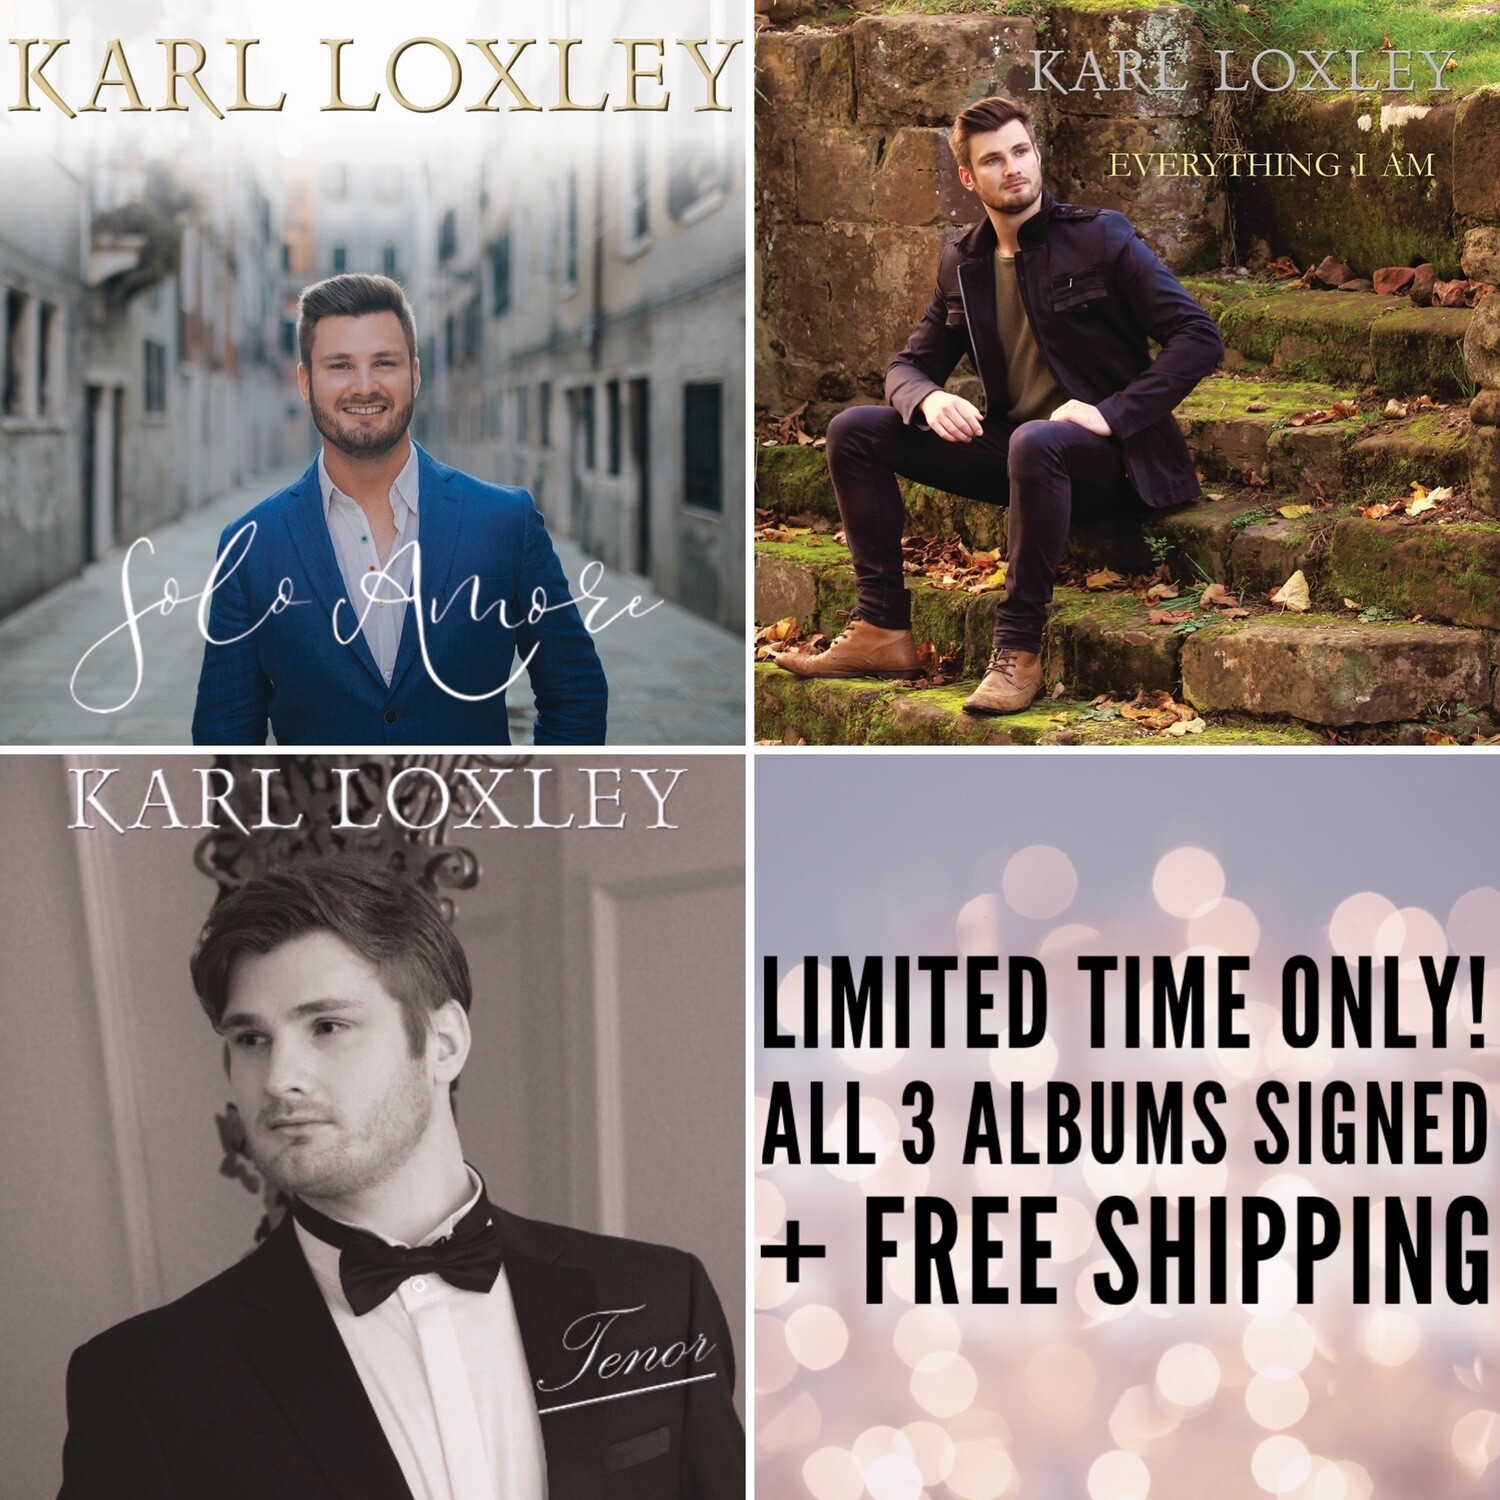 Karl Loxley Signed CD Album Bundle + Free Worldwide Shipping